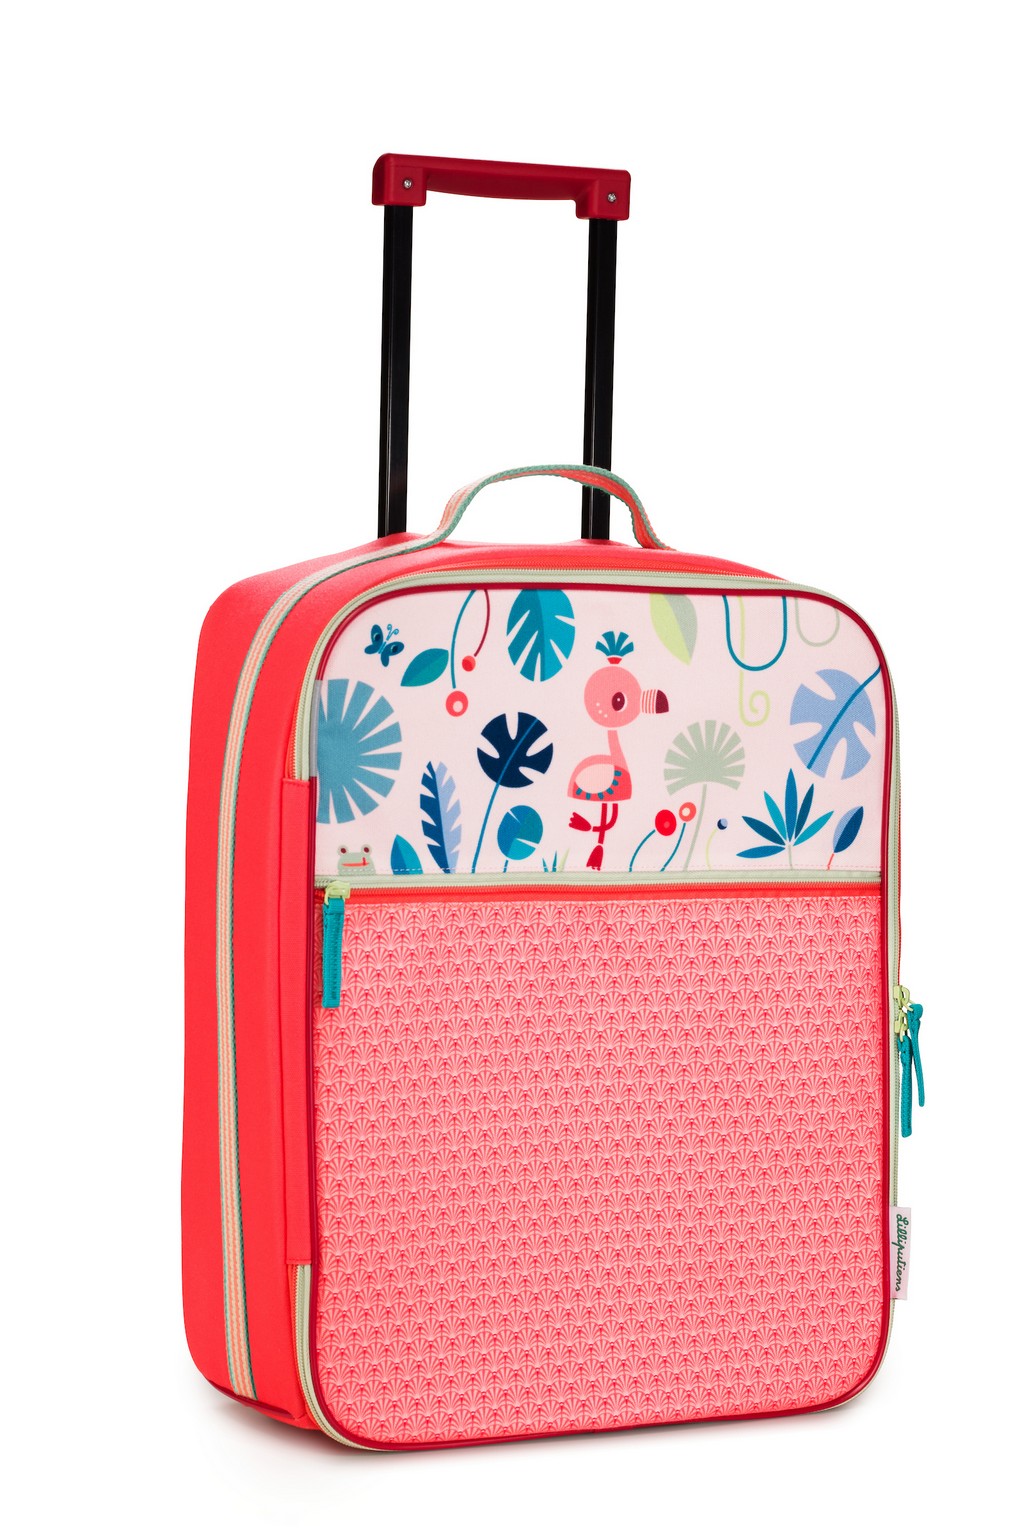 Чемодан Lilliputiens Фламинго Анаис, на колесиках, розовый, 84443 чемодан ninetygo manhattan frame luggage 20 розовый